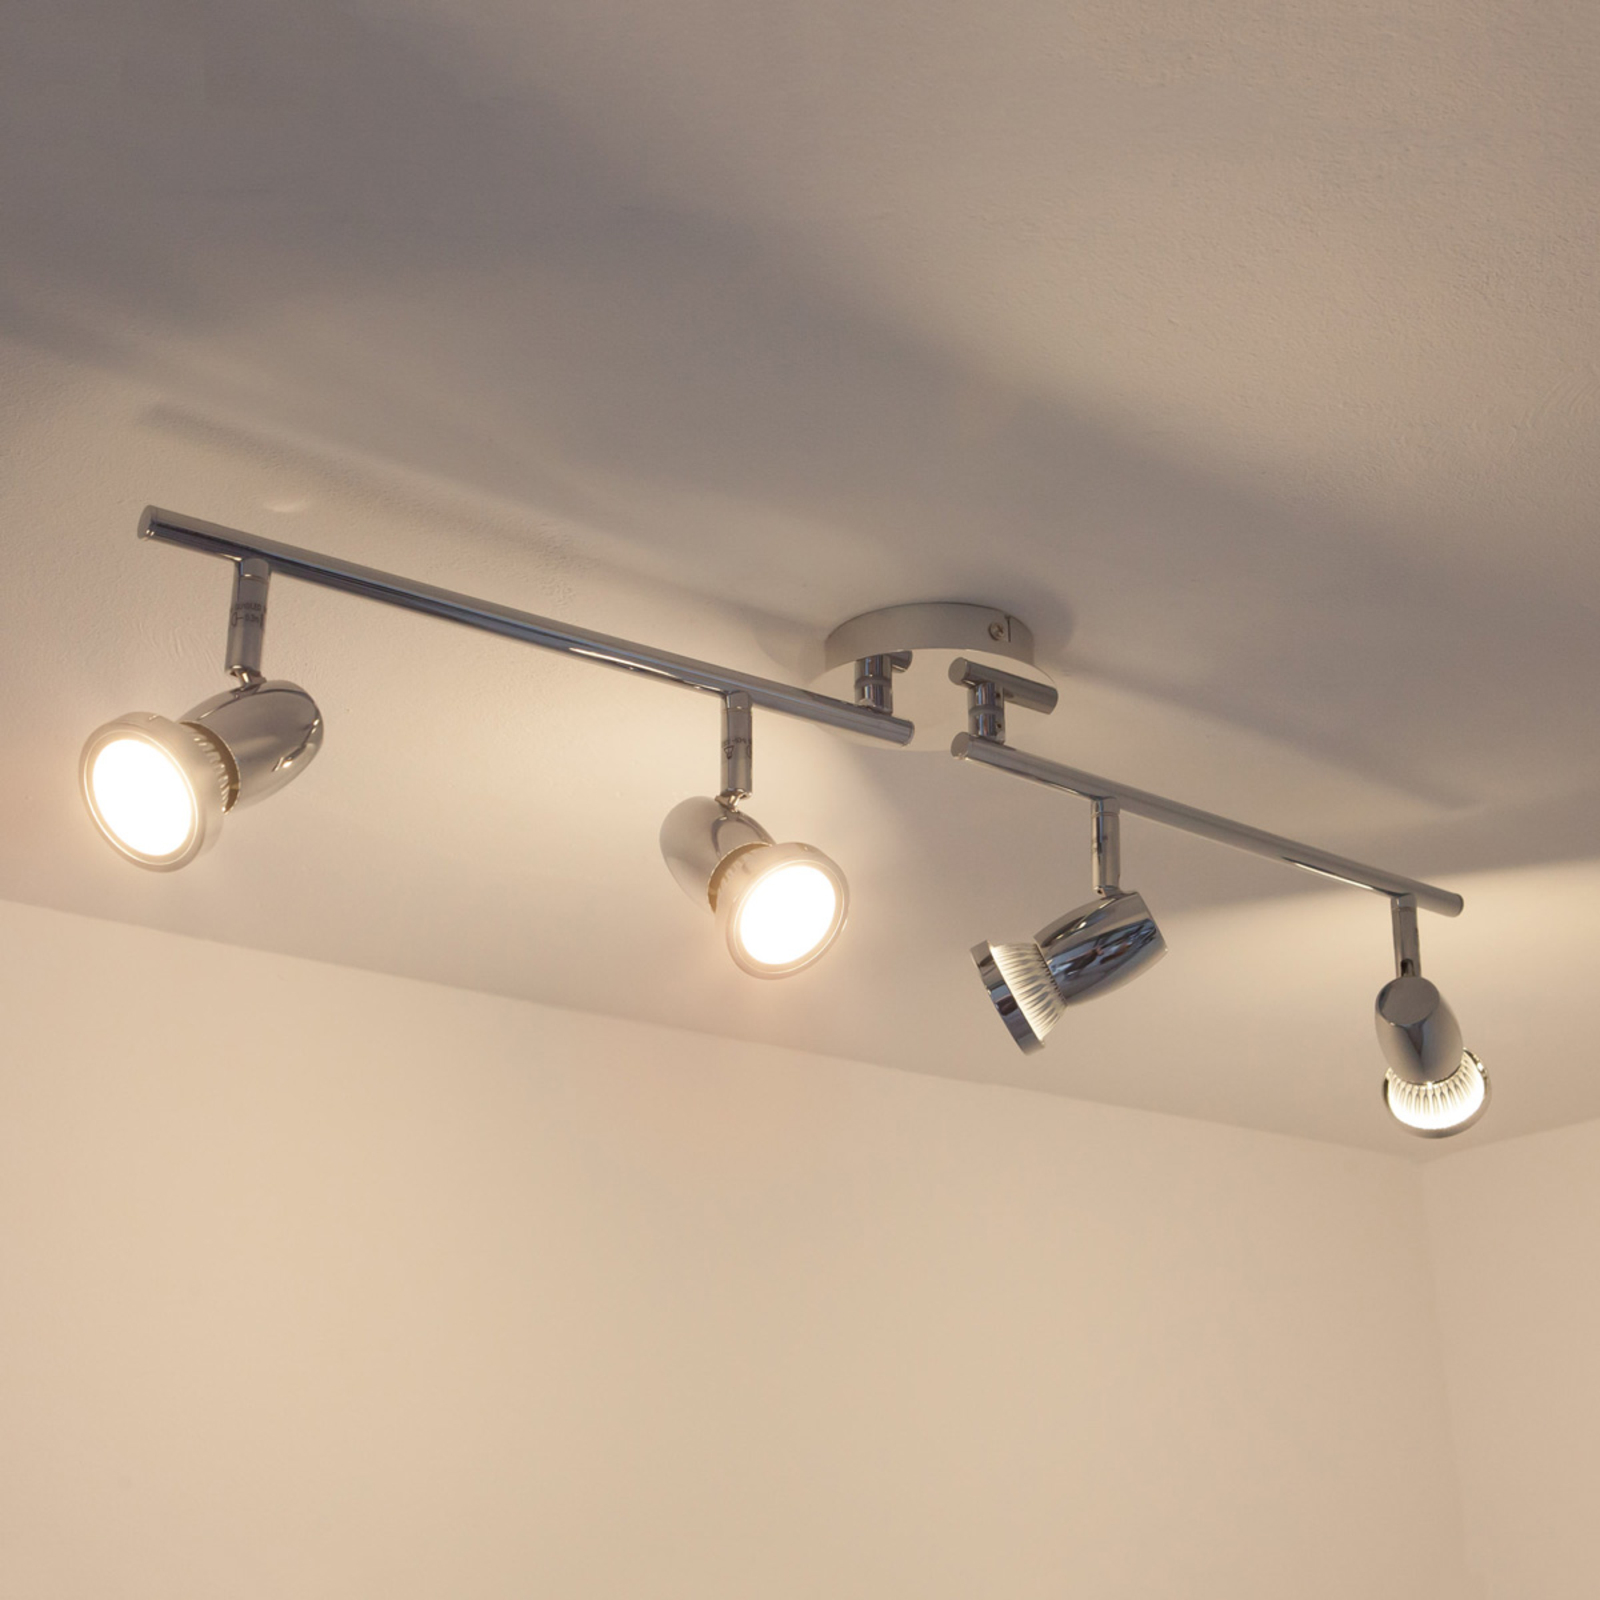 Geniet Subjectief Reis GU10 LED plafondlamp Arminius met vier lampen | Lampen24.nl